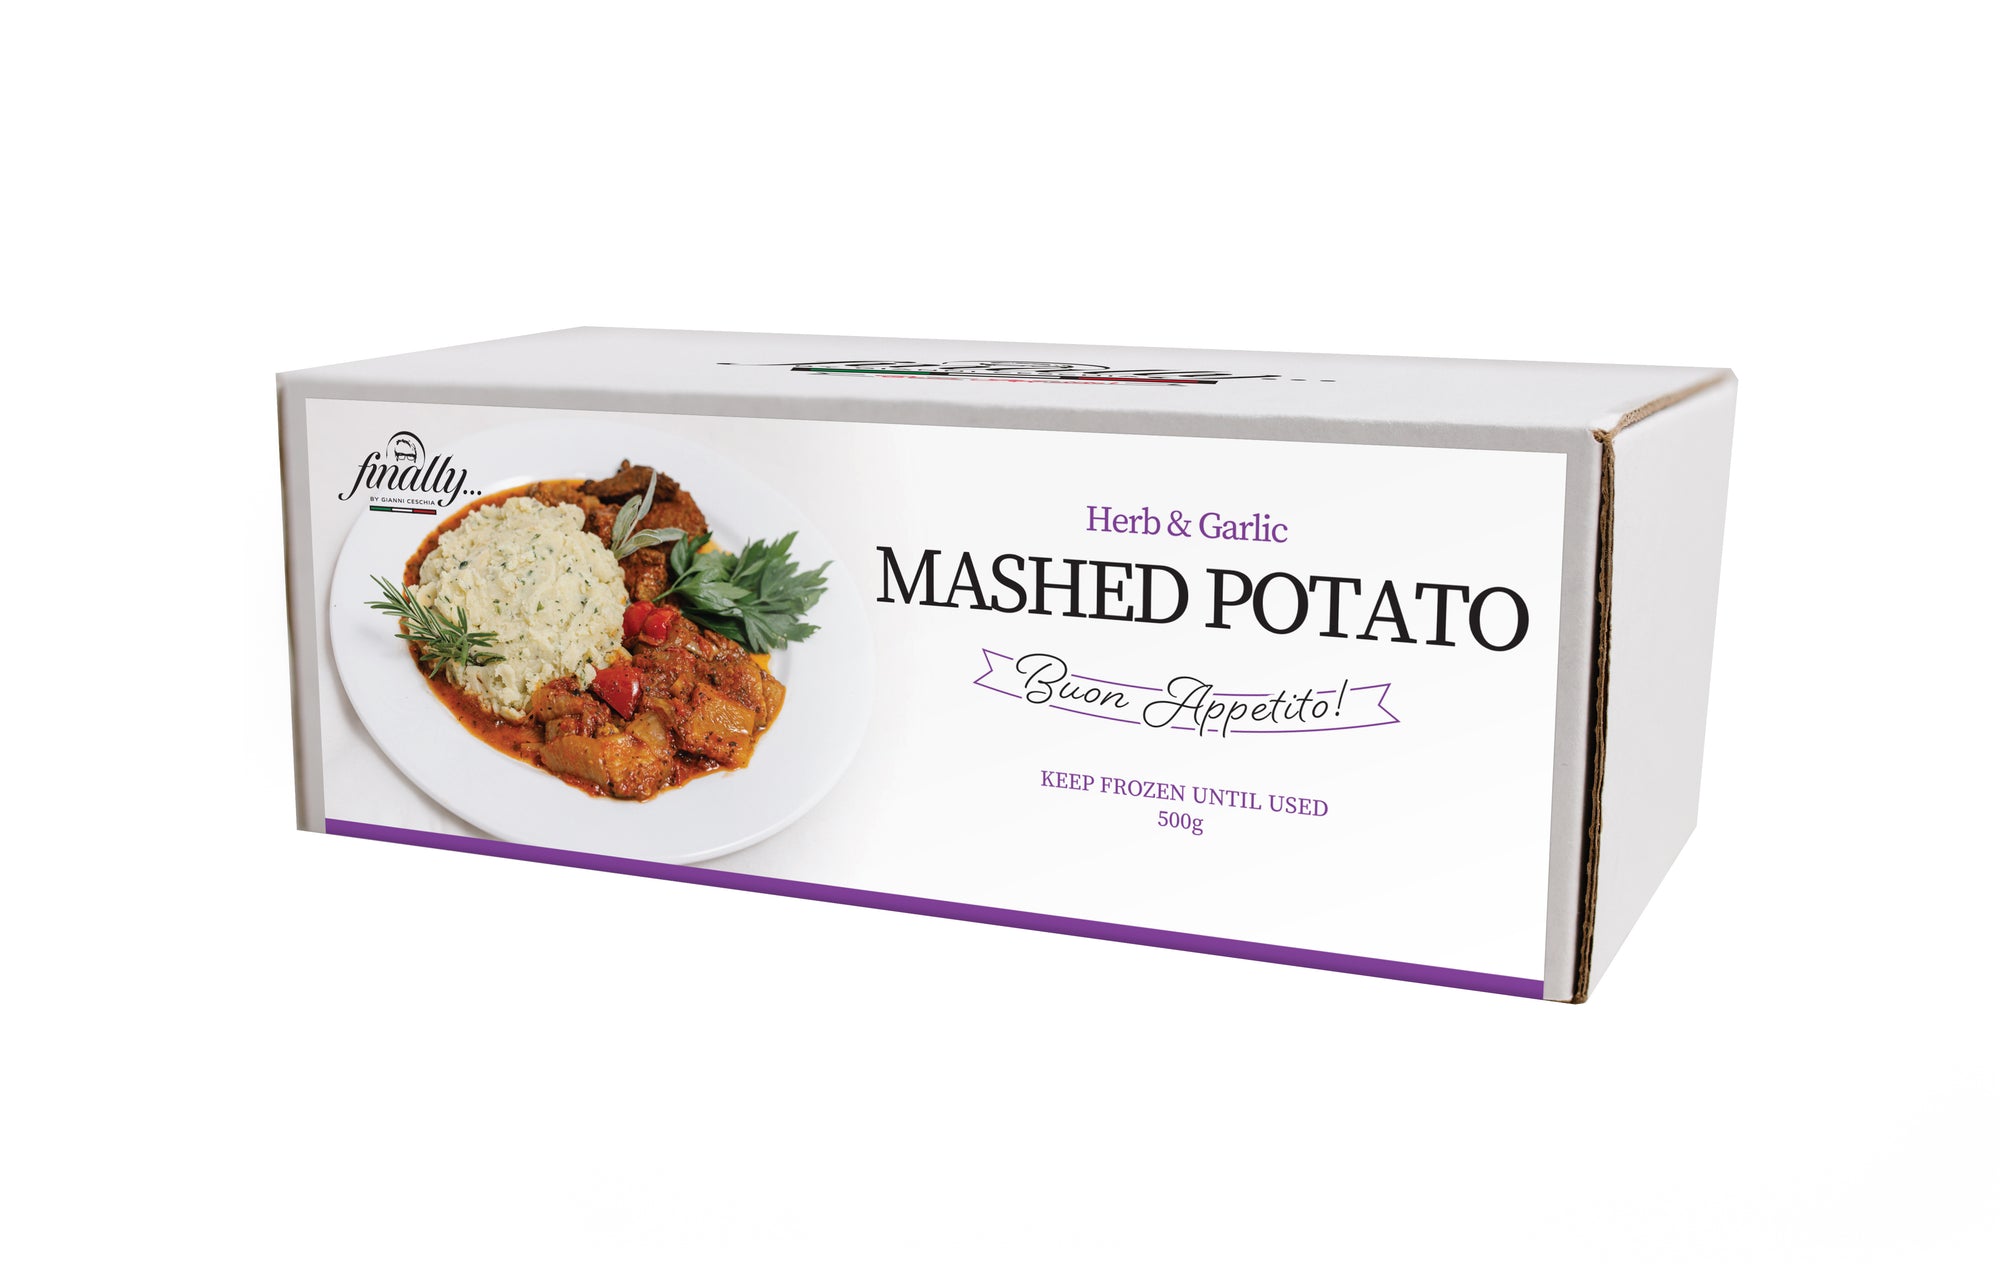 Mashed Potato - Herb/Garlic on a plate